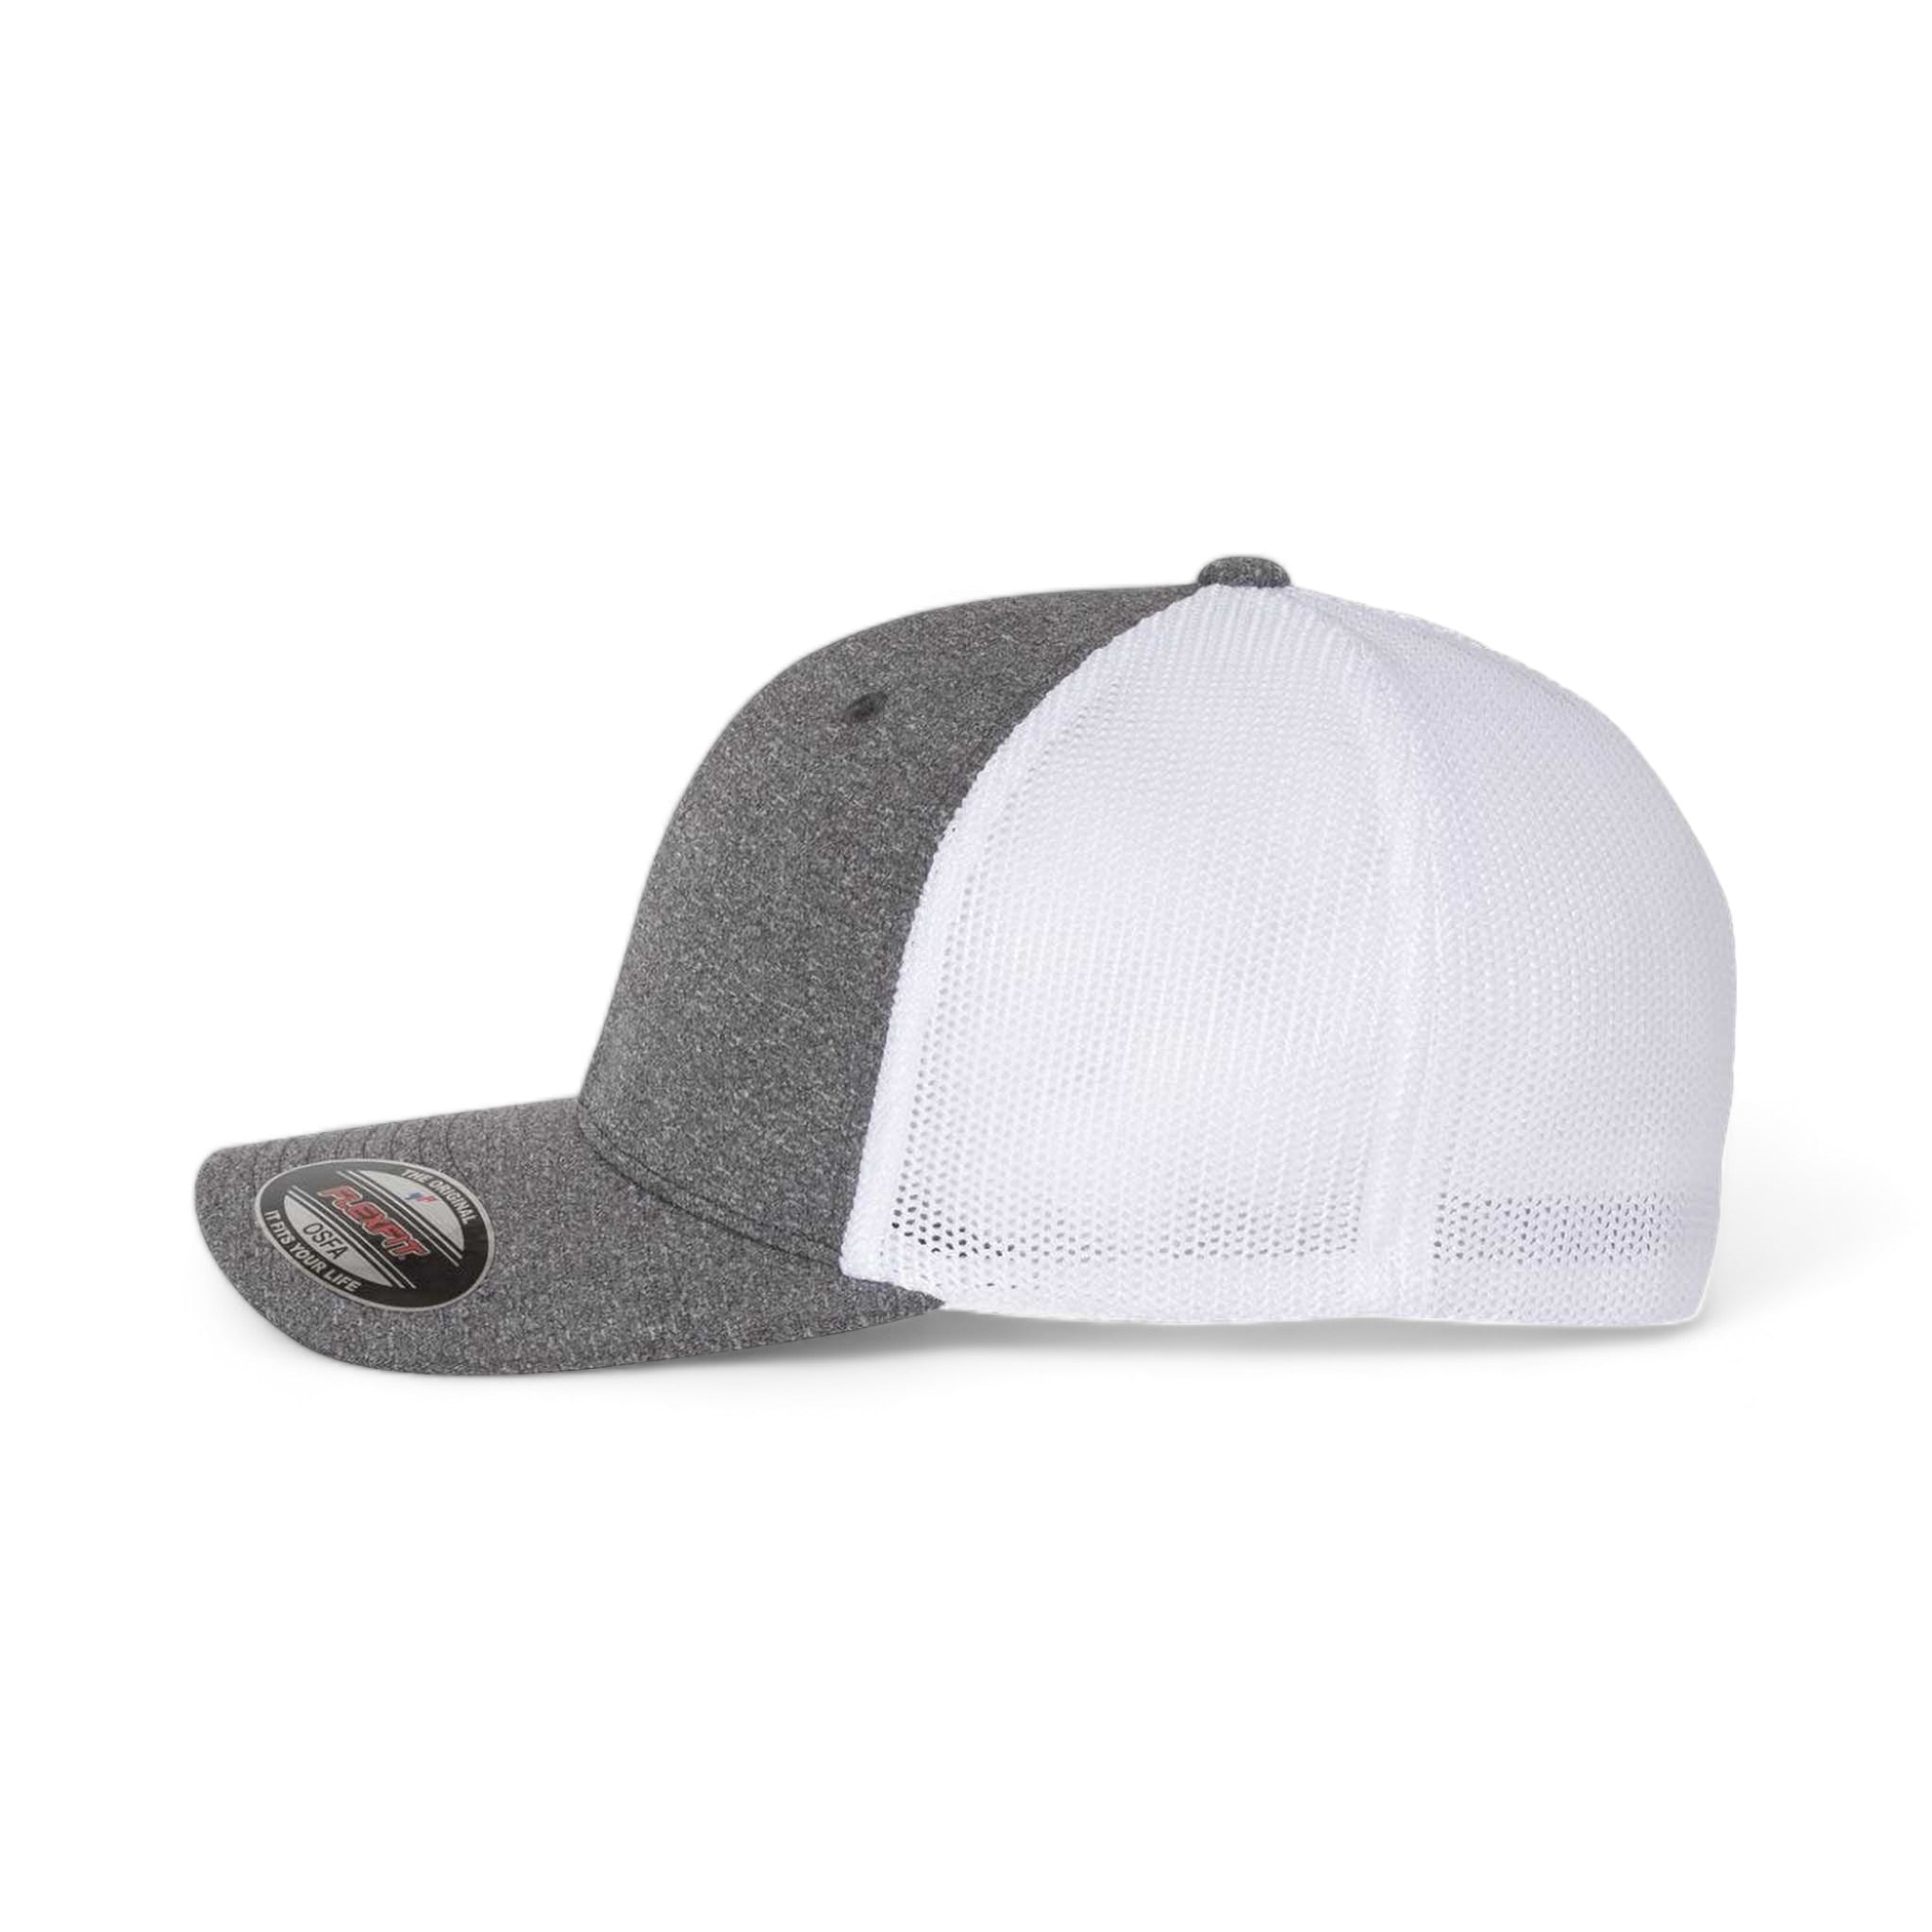 Side view of Flexfit 6311 custom hat in dark heather grey and white